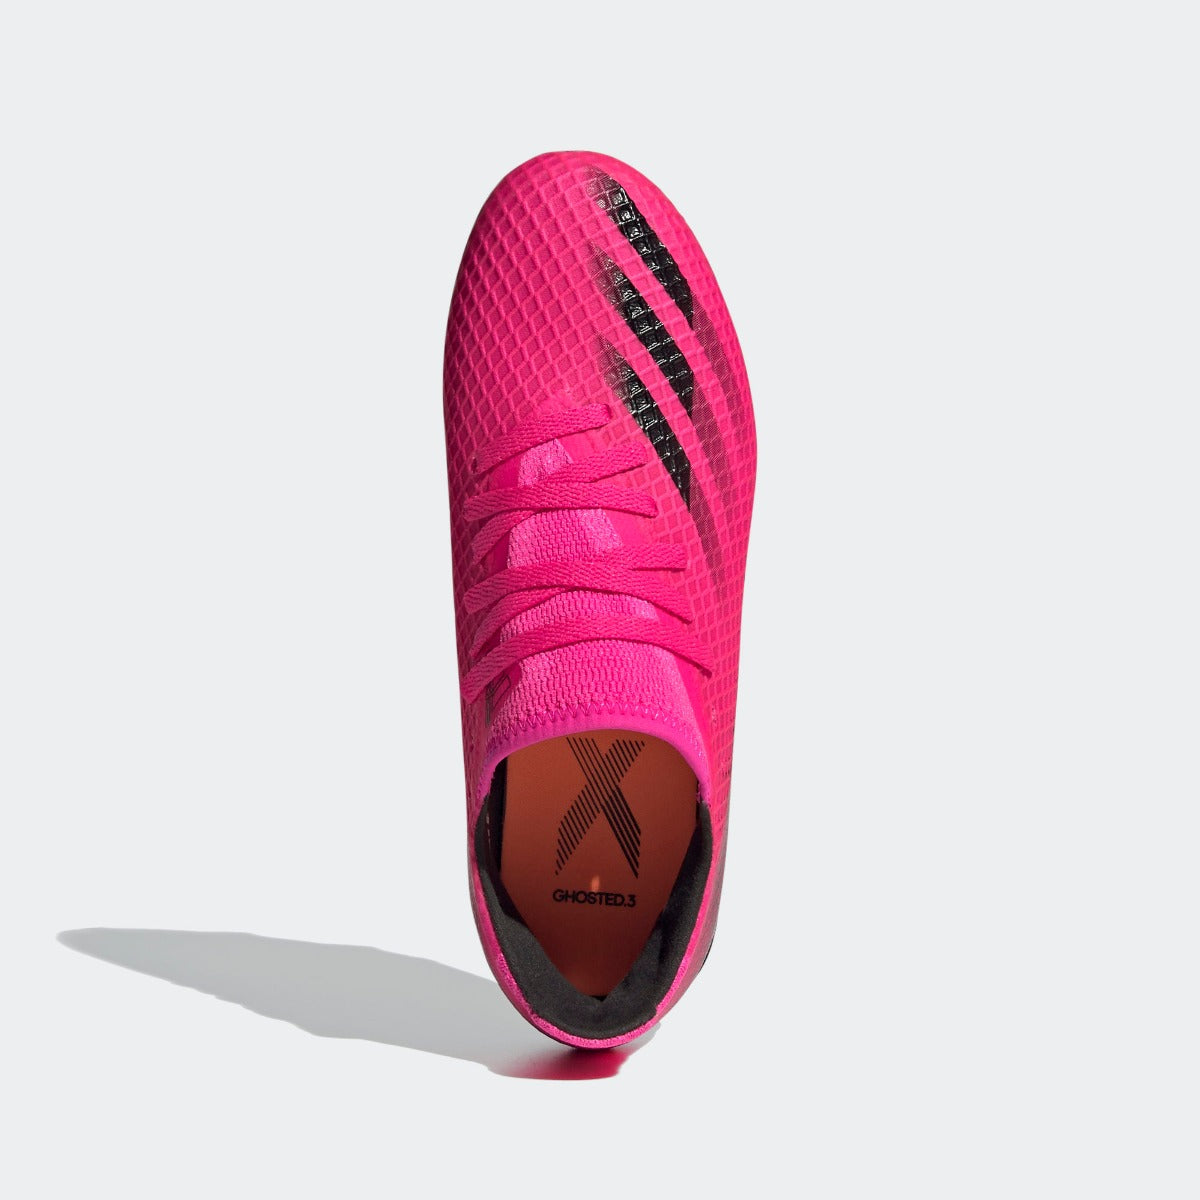 Adidas JR X ghosted .3 FG - Pink-Black-Orange (Top)